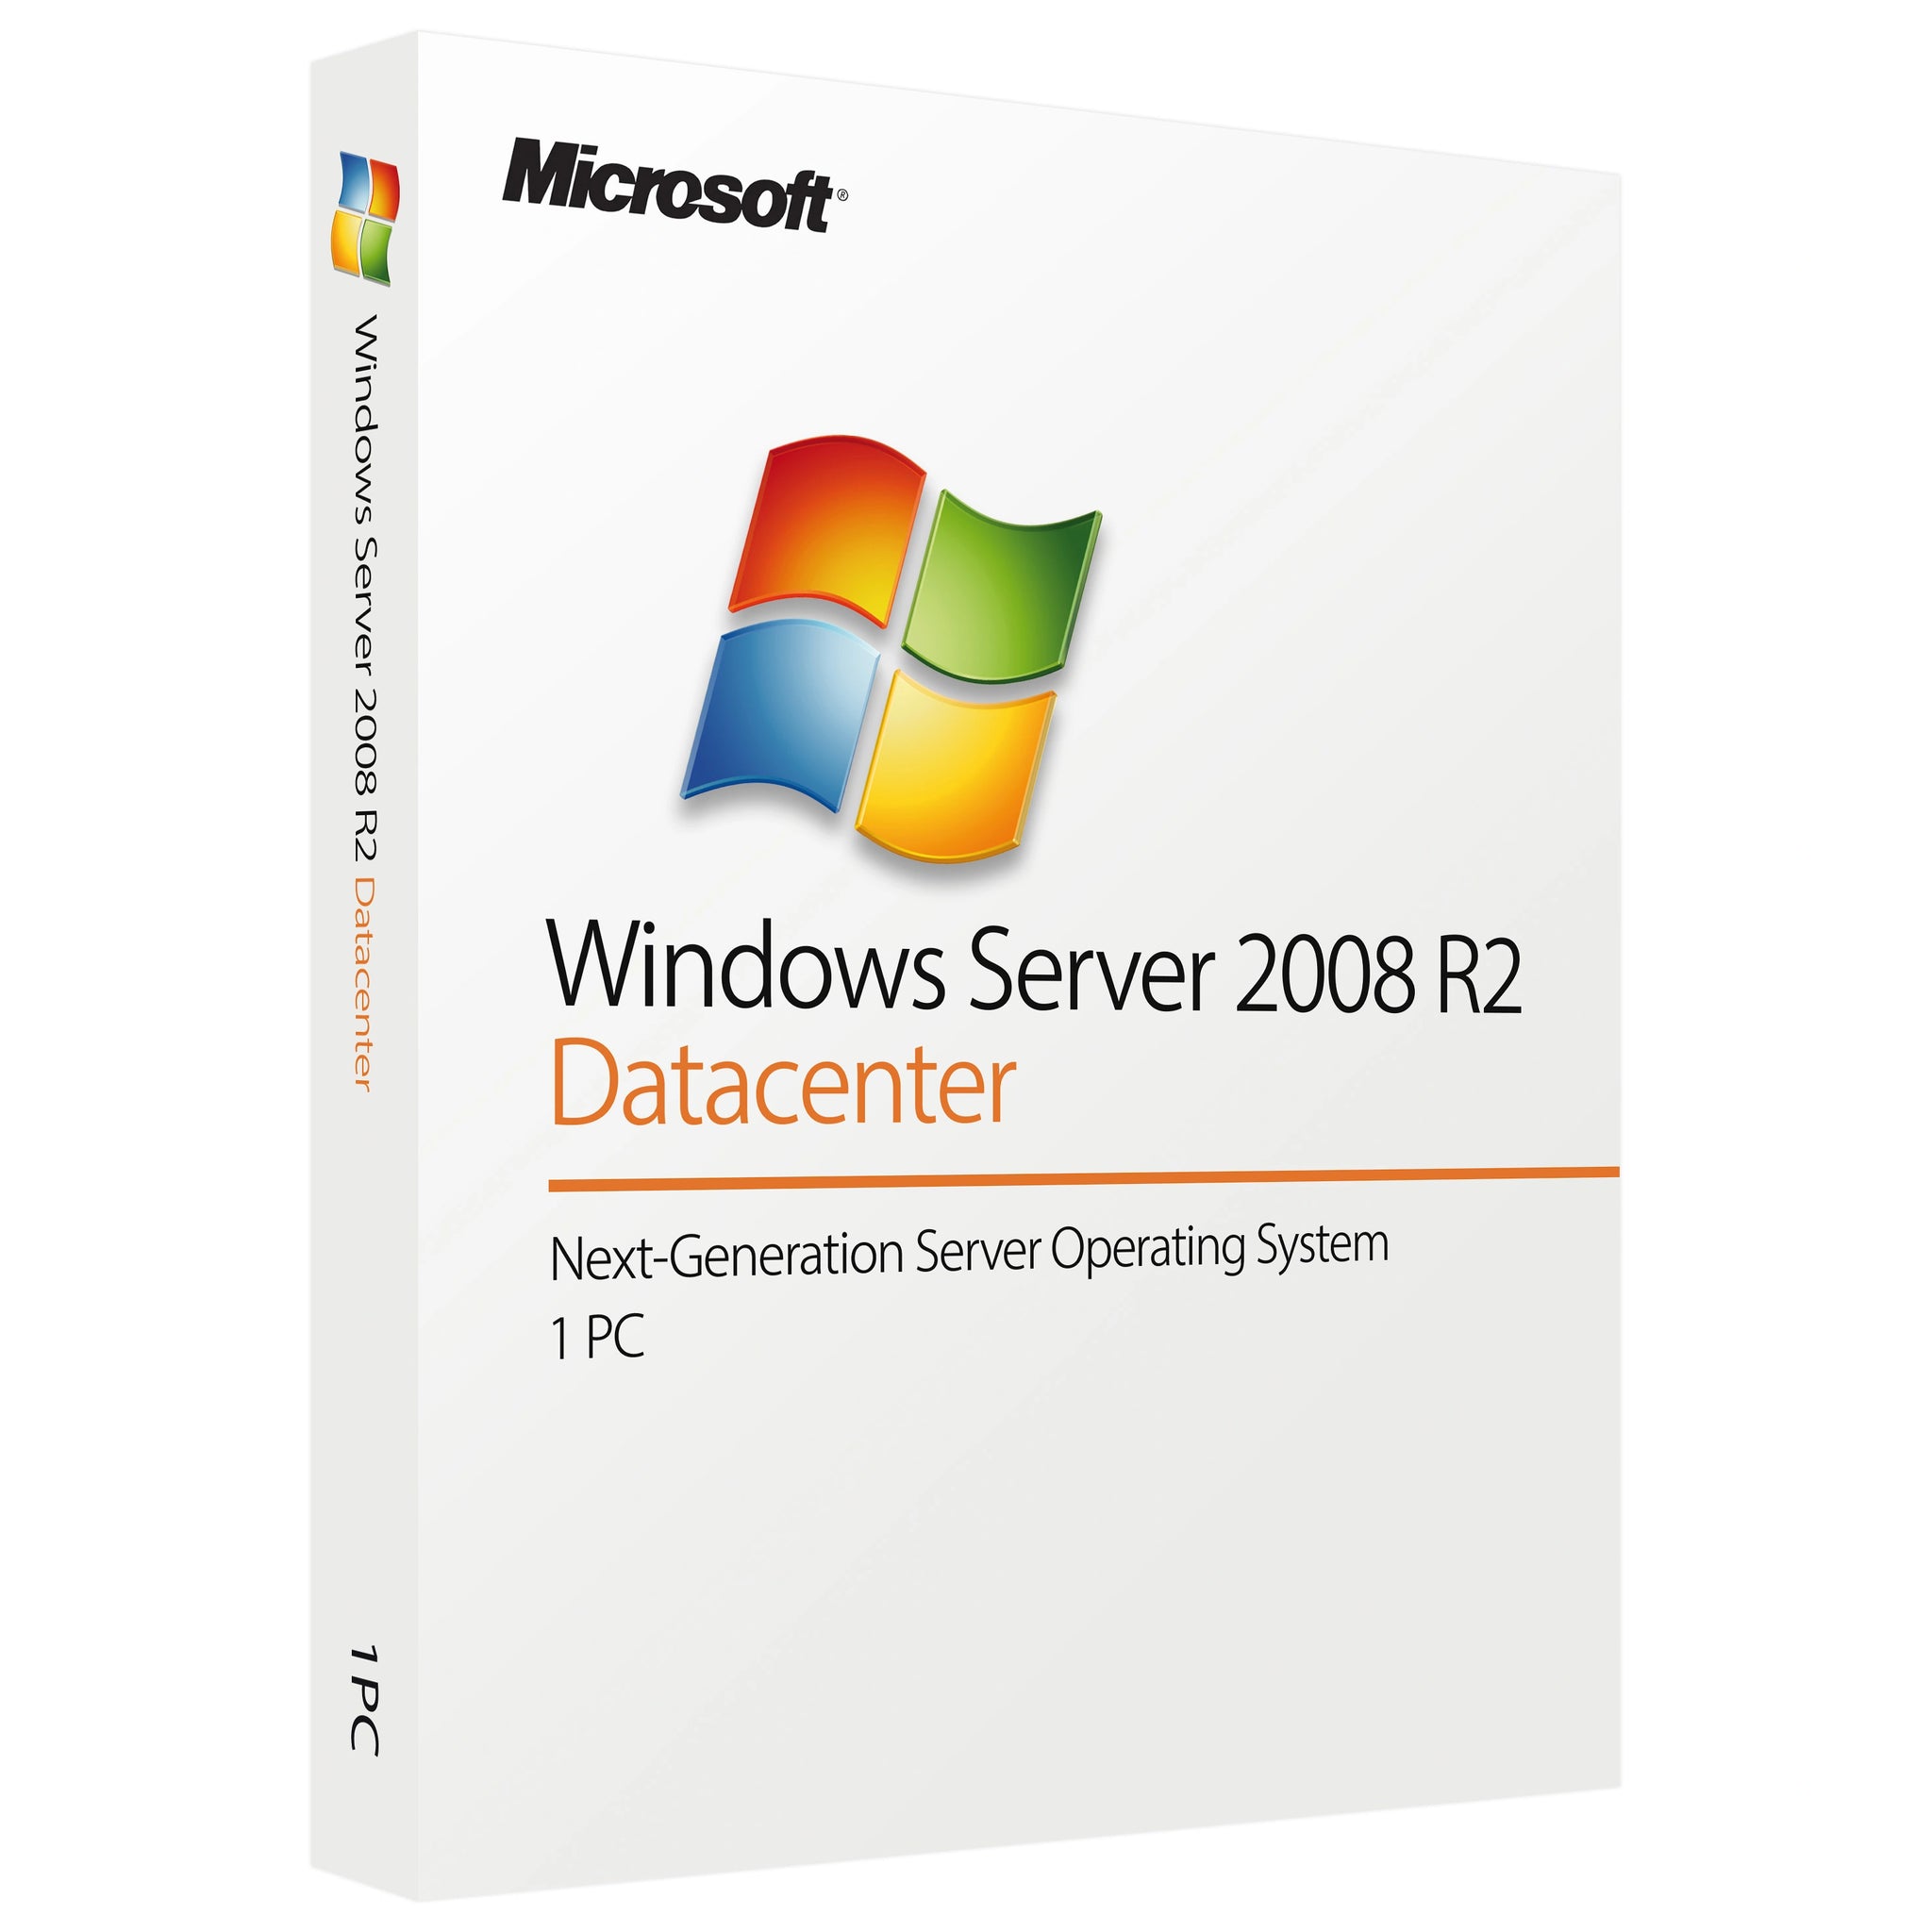 Microsoft Windows Server 2008 Datacenter - Lifetime License Key For 1 PC